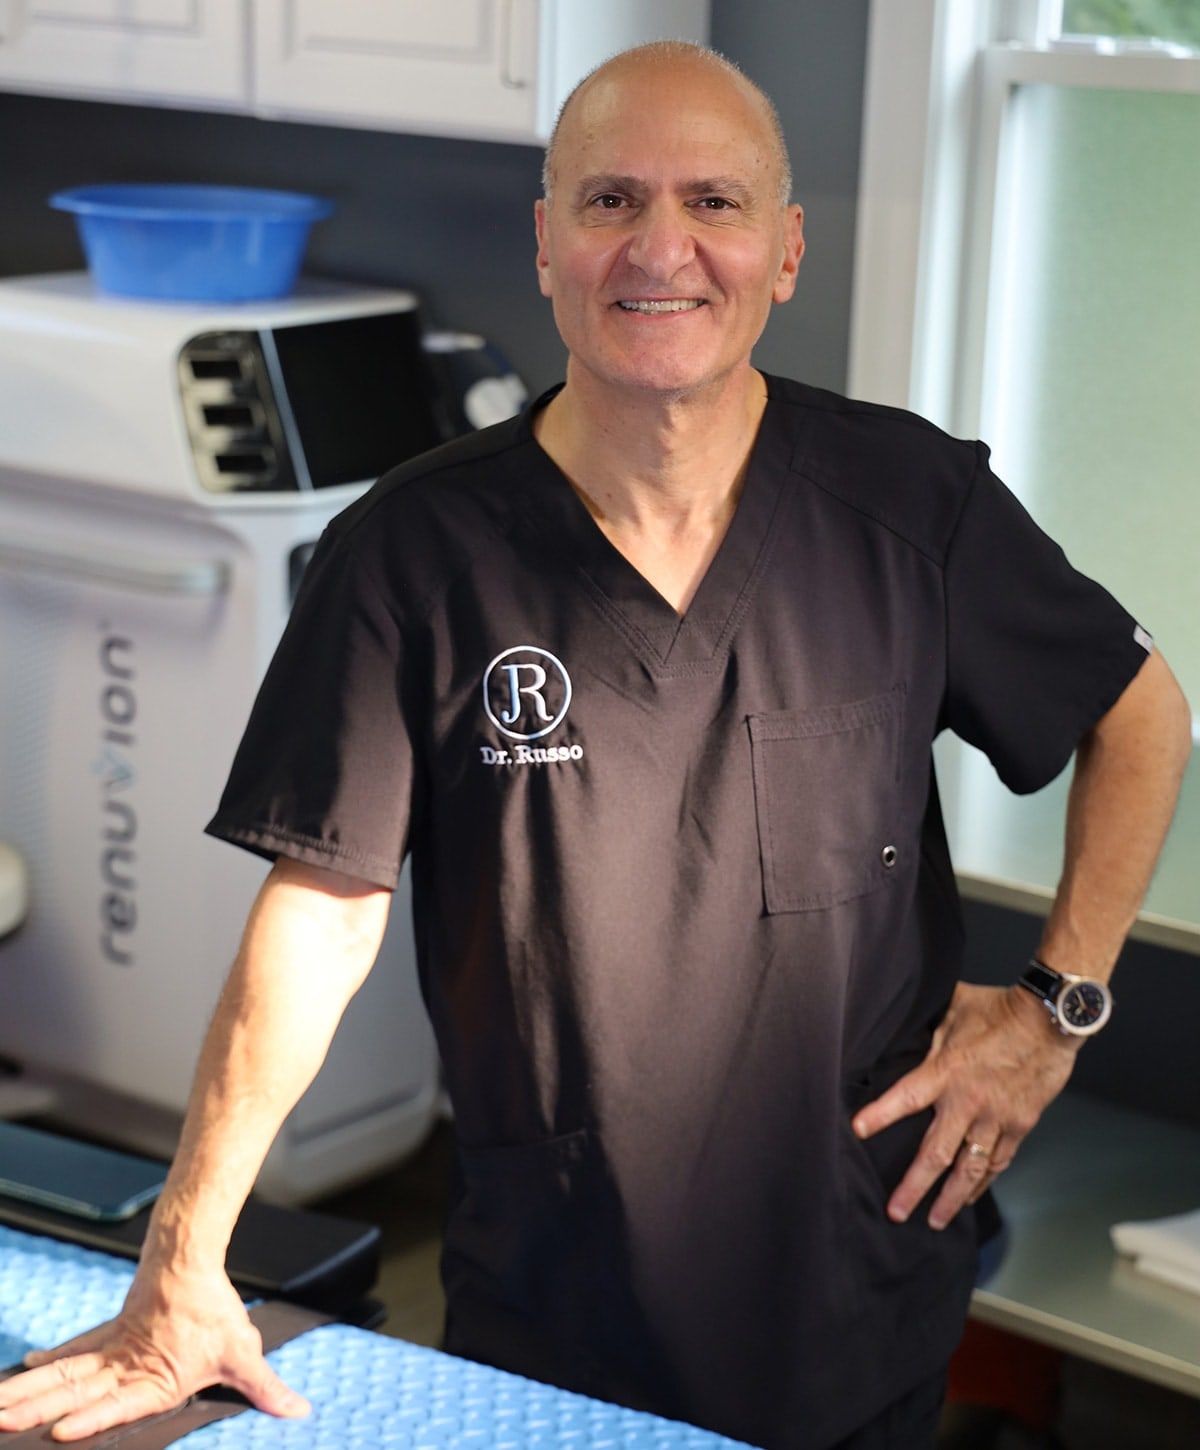 Dr. Russo - Boston Plastic Surgeon